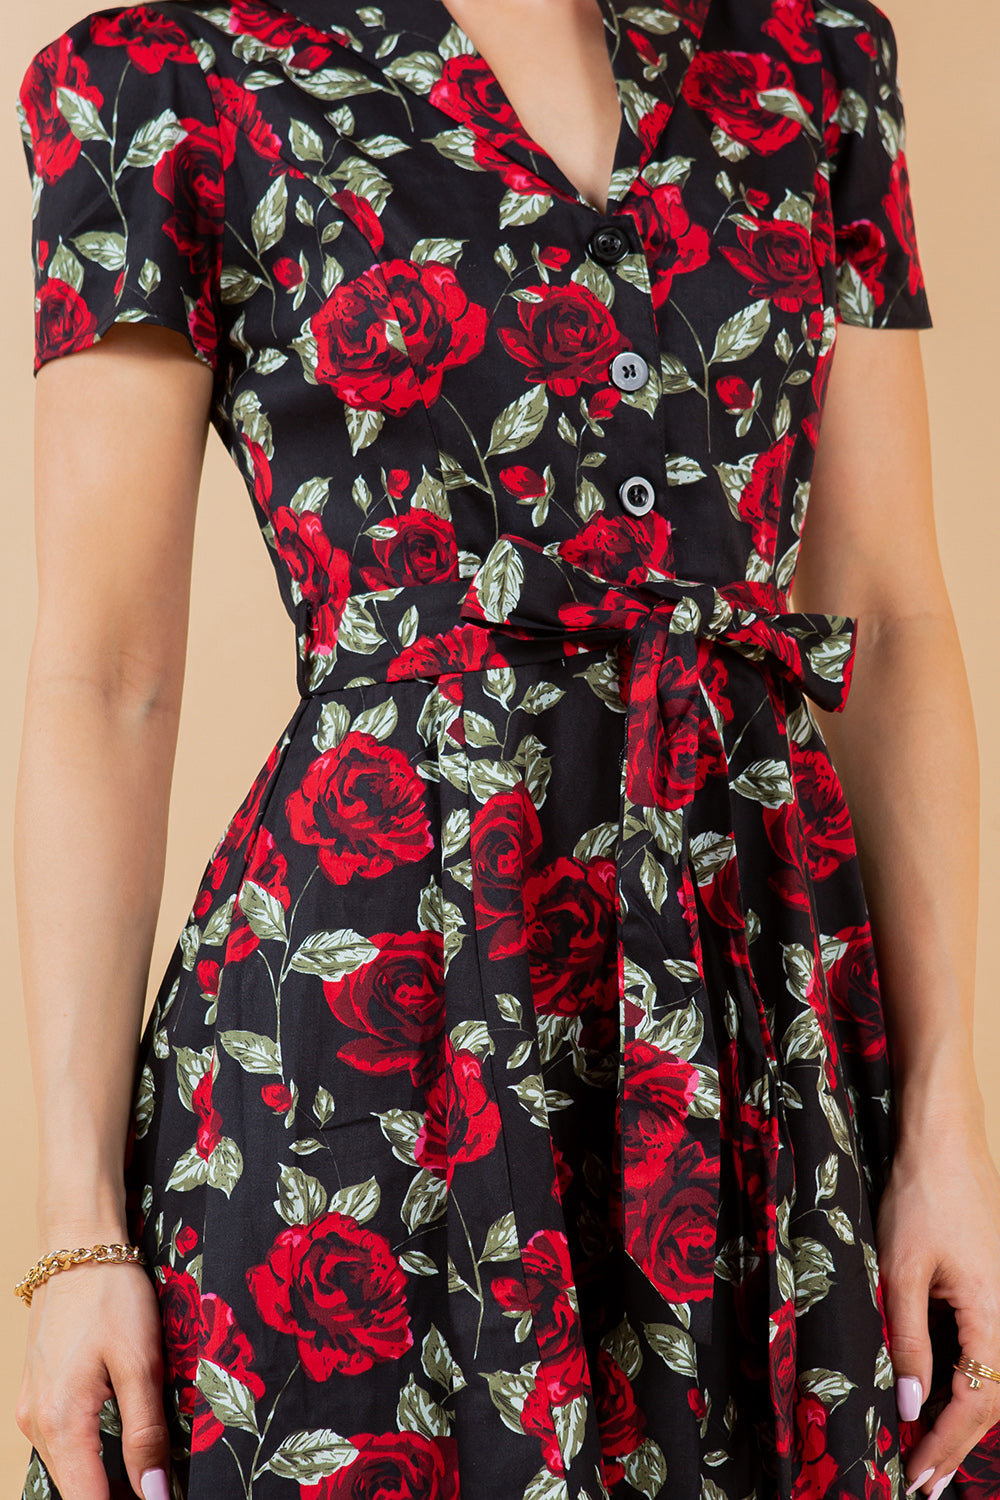 Vintage Rose Fit and Flare Dress